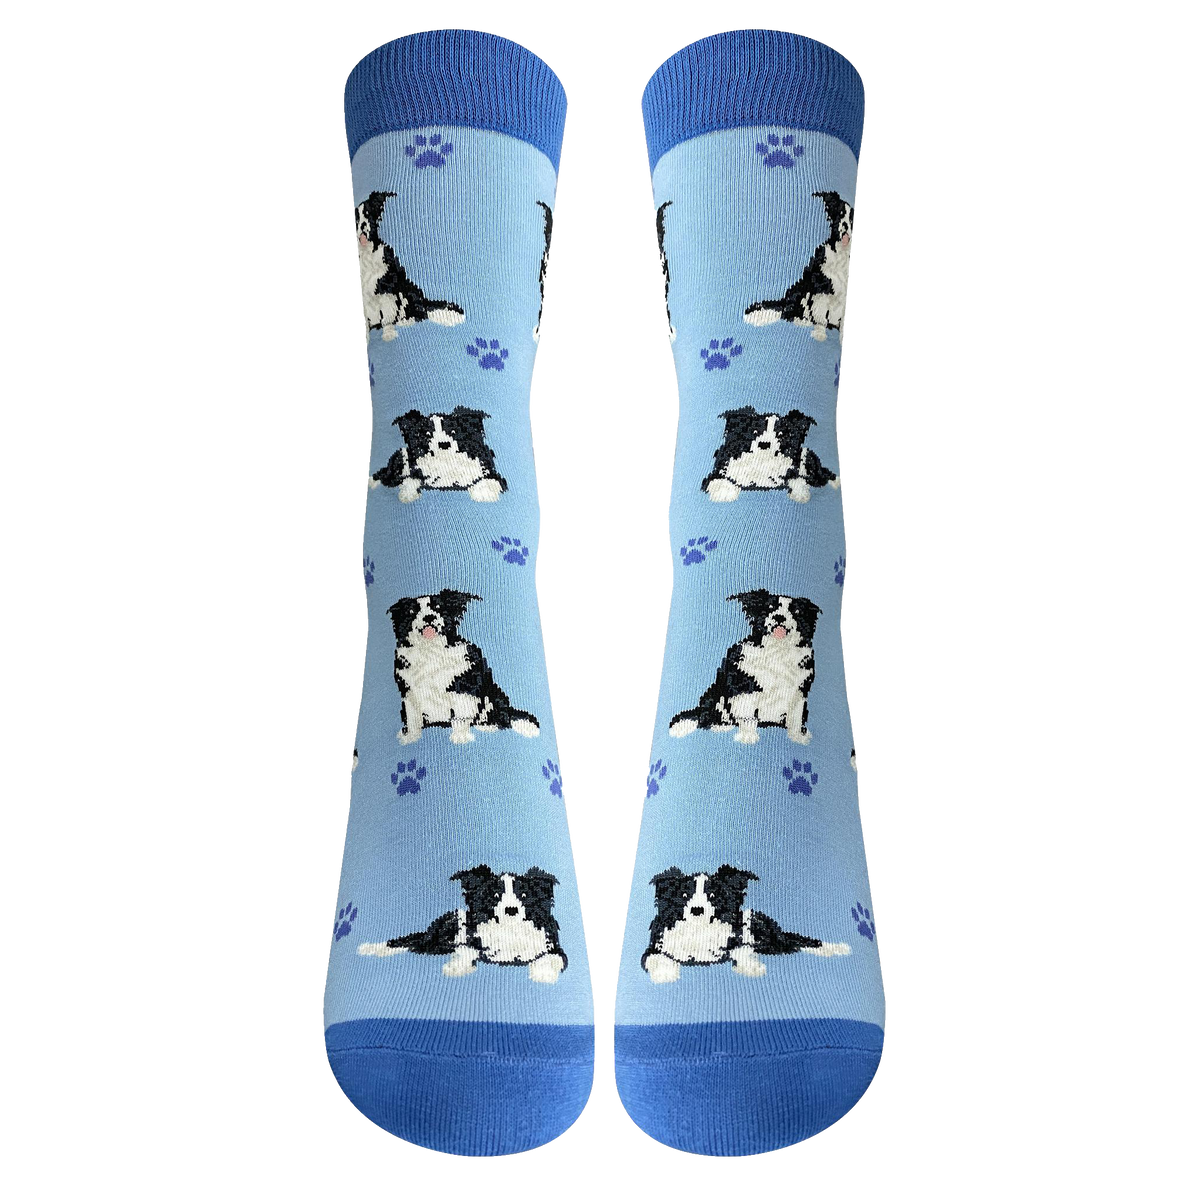 Border Collie Dog Socks